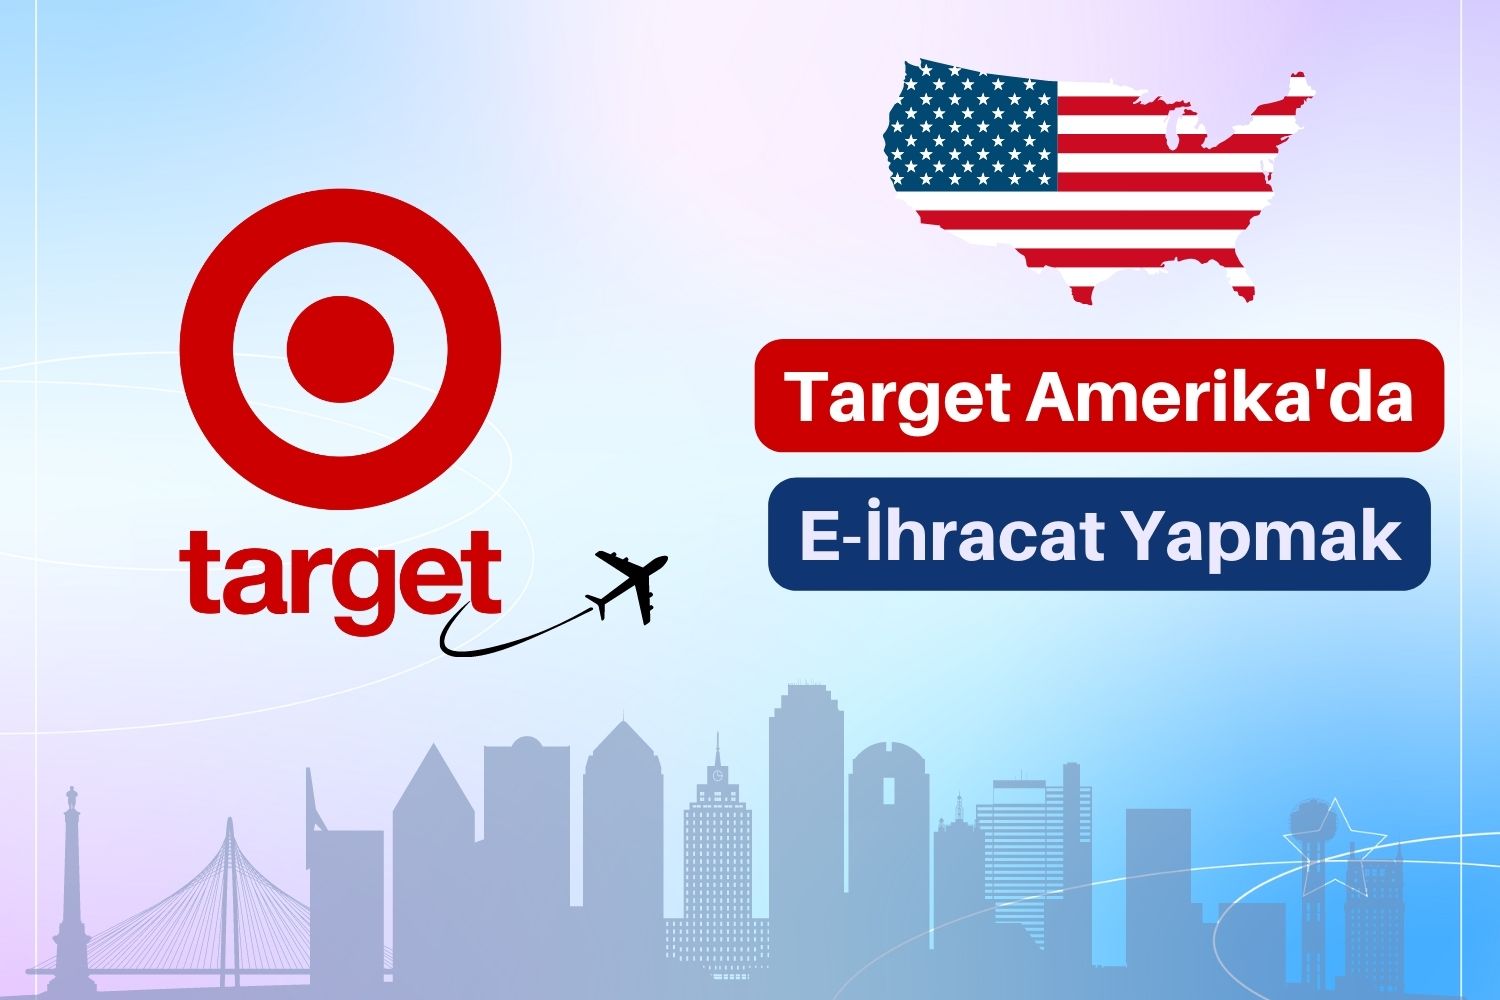 target-amerikada-satis-amerikada-eticaret-targetda-satici-olmak-amerikaya-ihracat-amazon-danismanlik